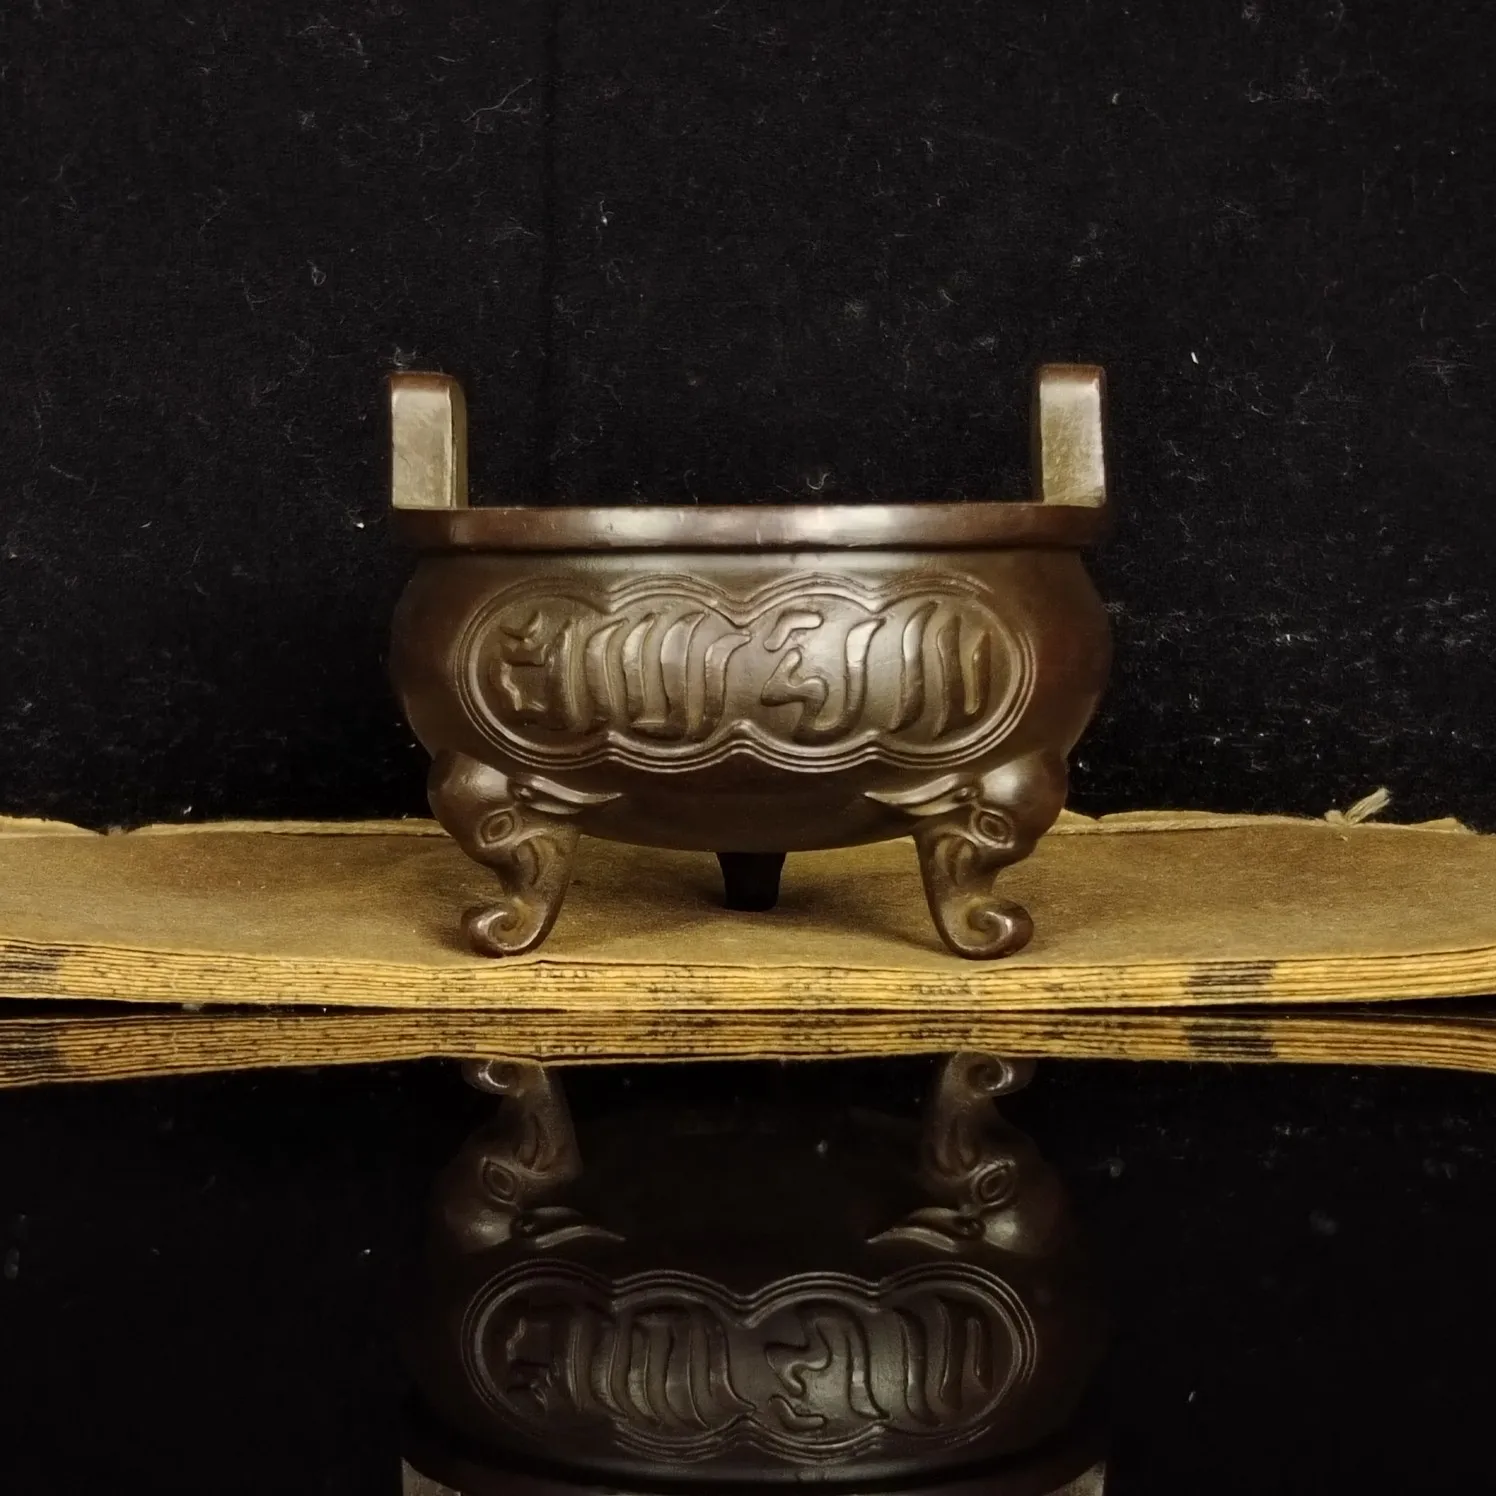 

Exquisite antique pure copper palindrome incense burner ornament